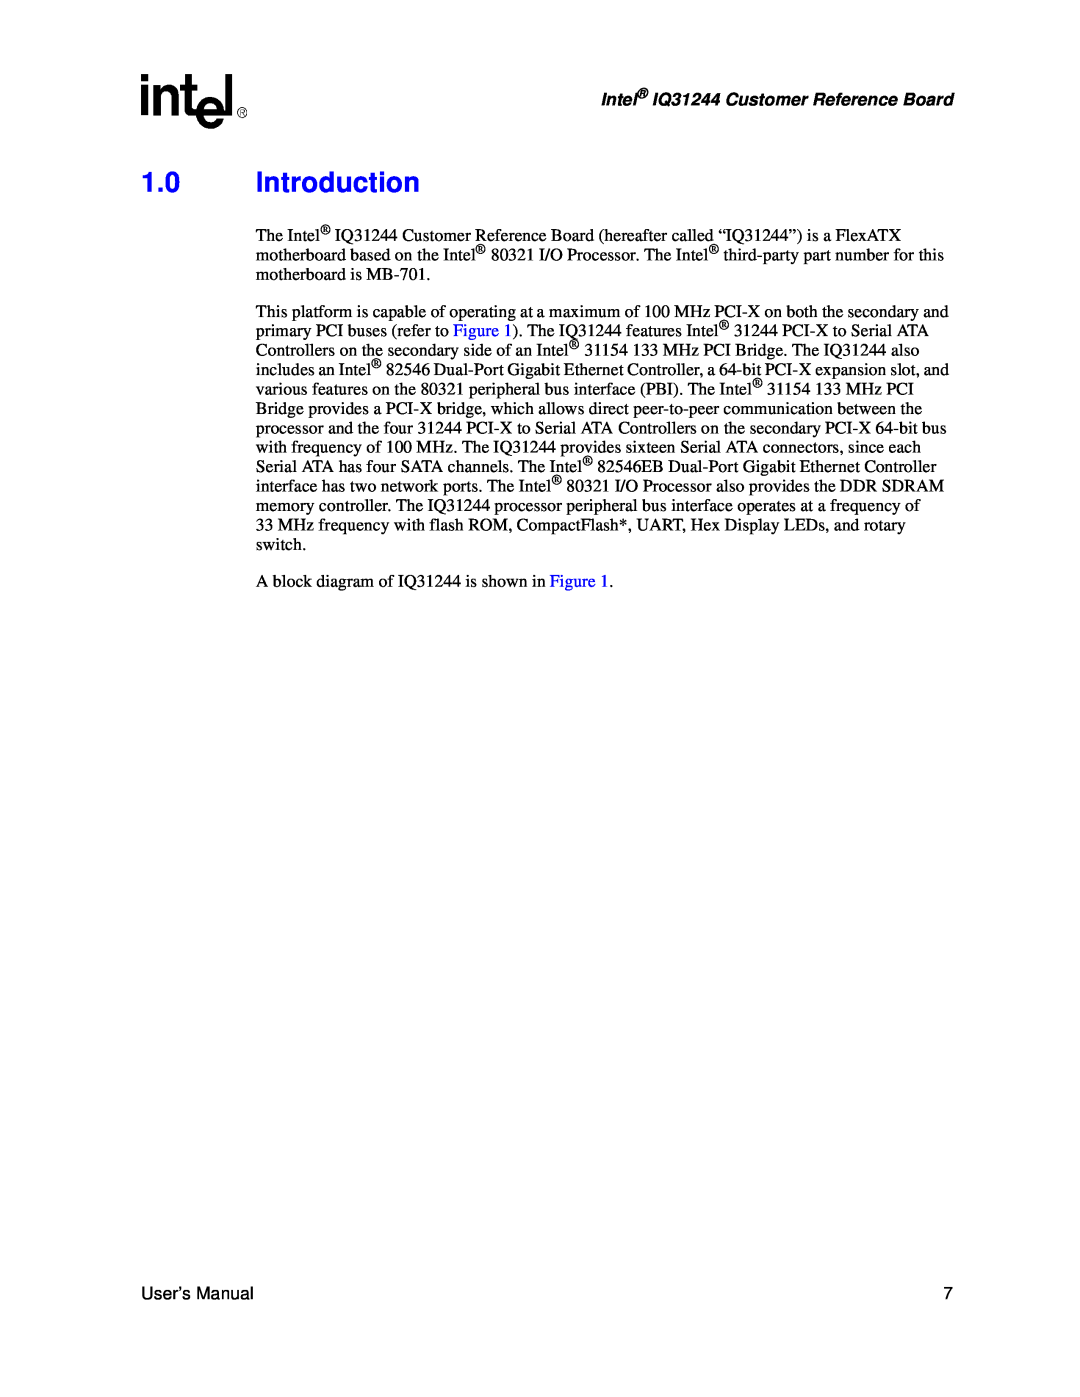 Intel user manual 1.0Introduction, Intel IQ31244 Customer Reference Board 